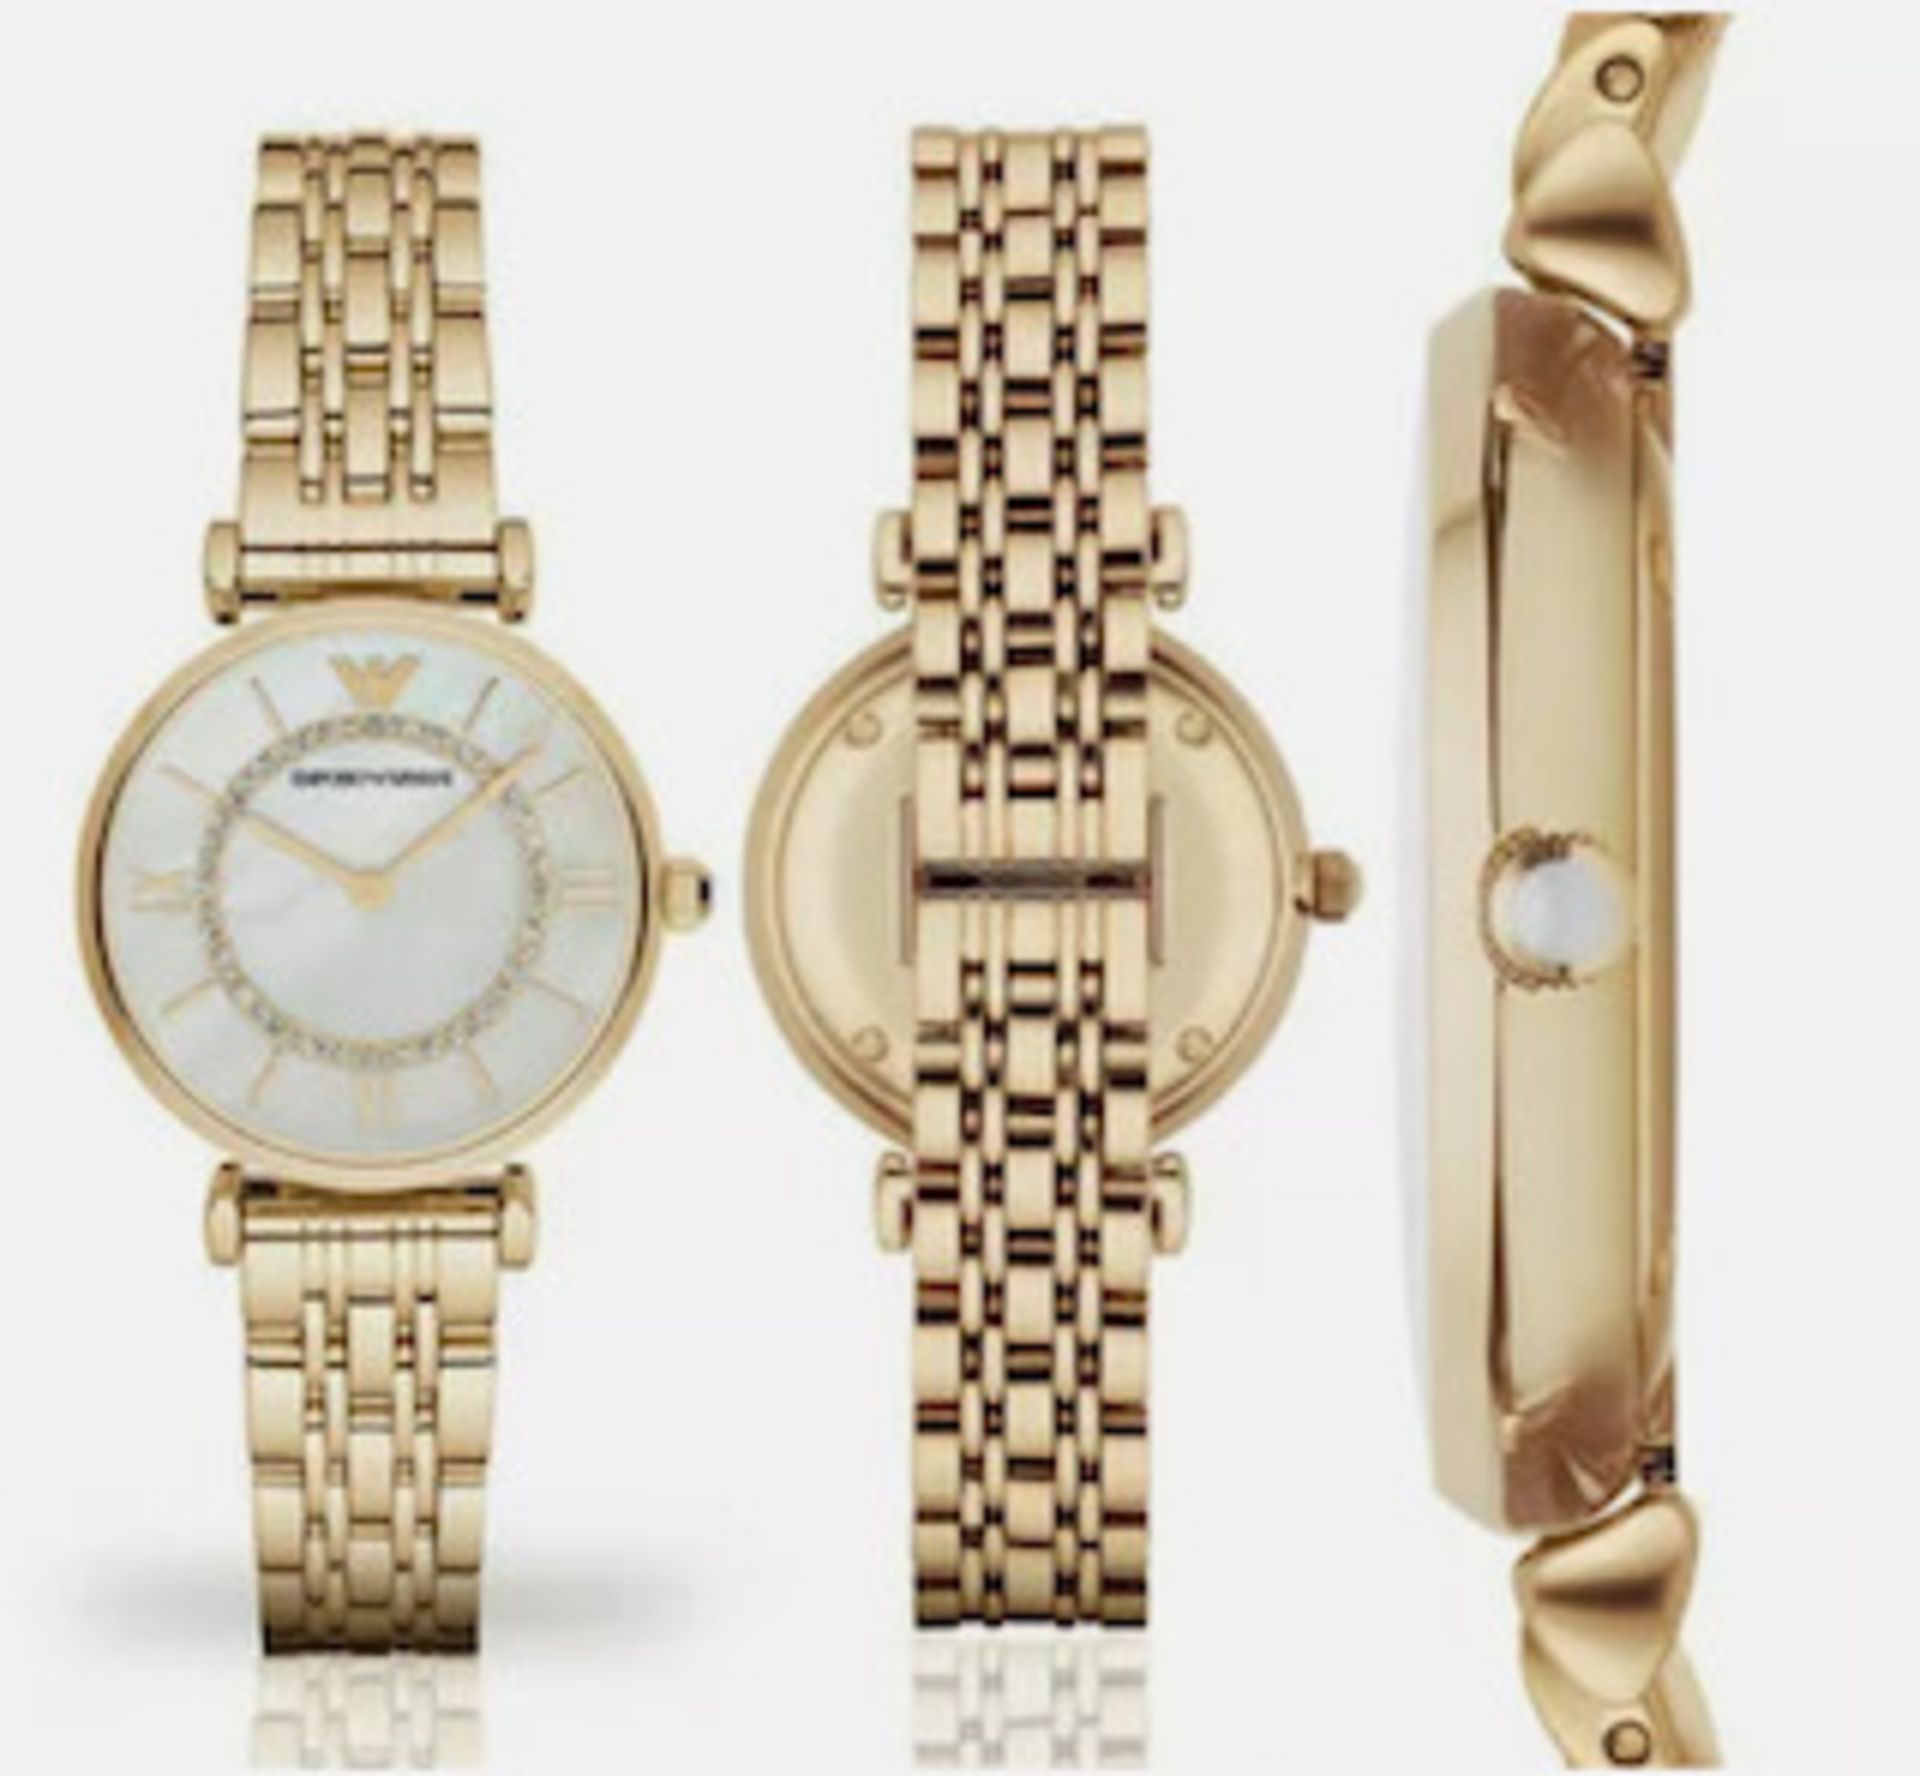 Emporio Armani AR1907 Ladies Mother Of Pearl Dial Gold Tone Bracelet Quartz Watch - Image 5 of 6